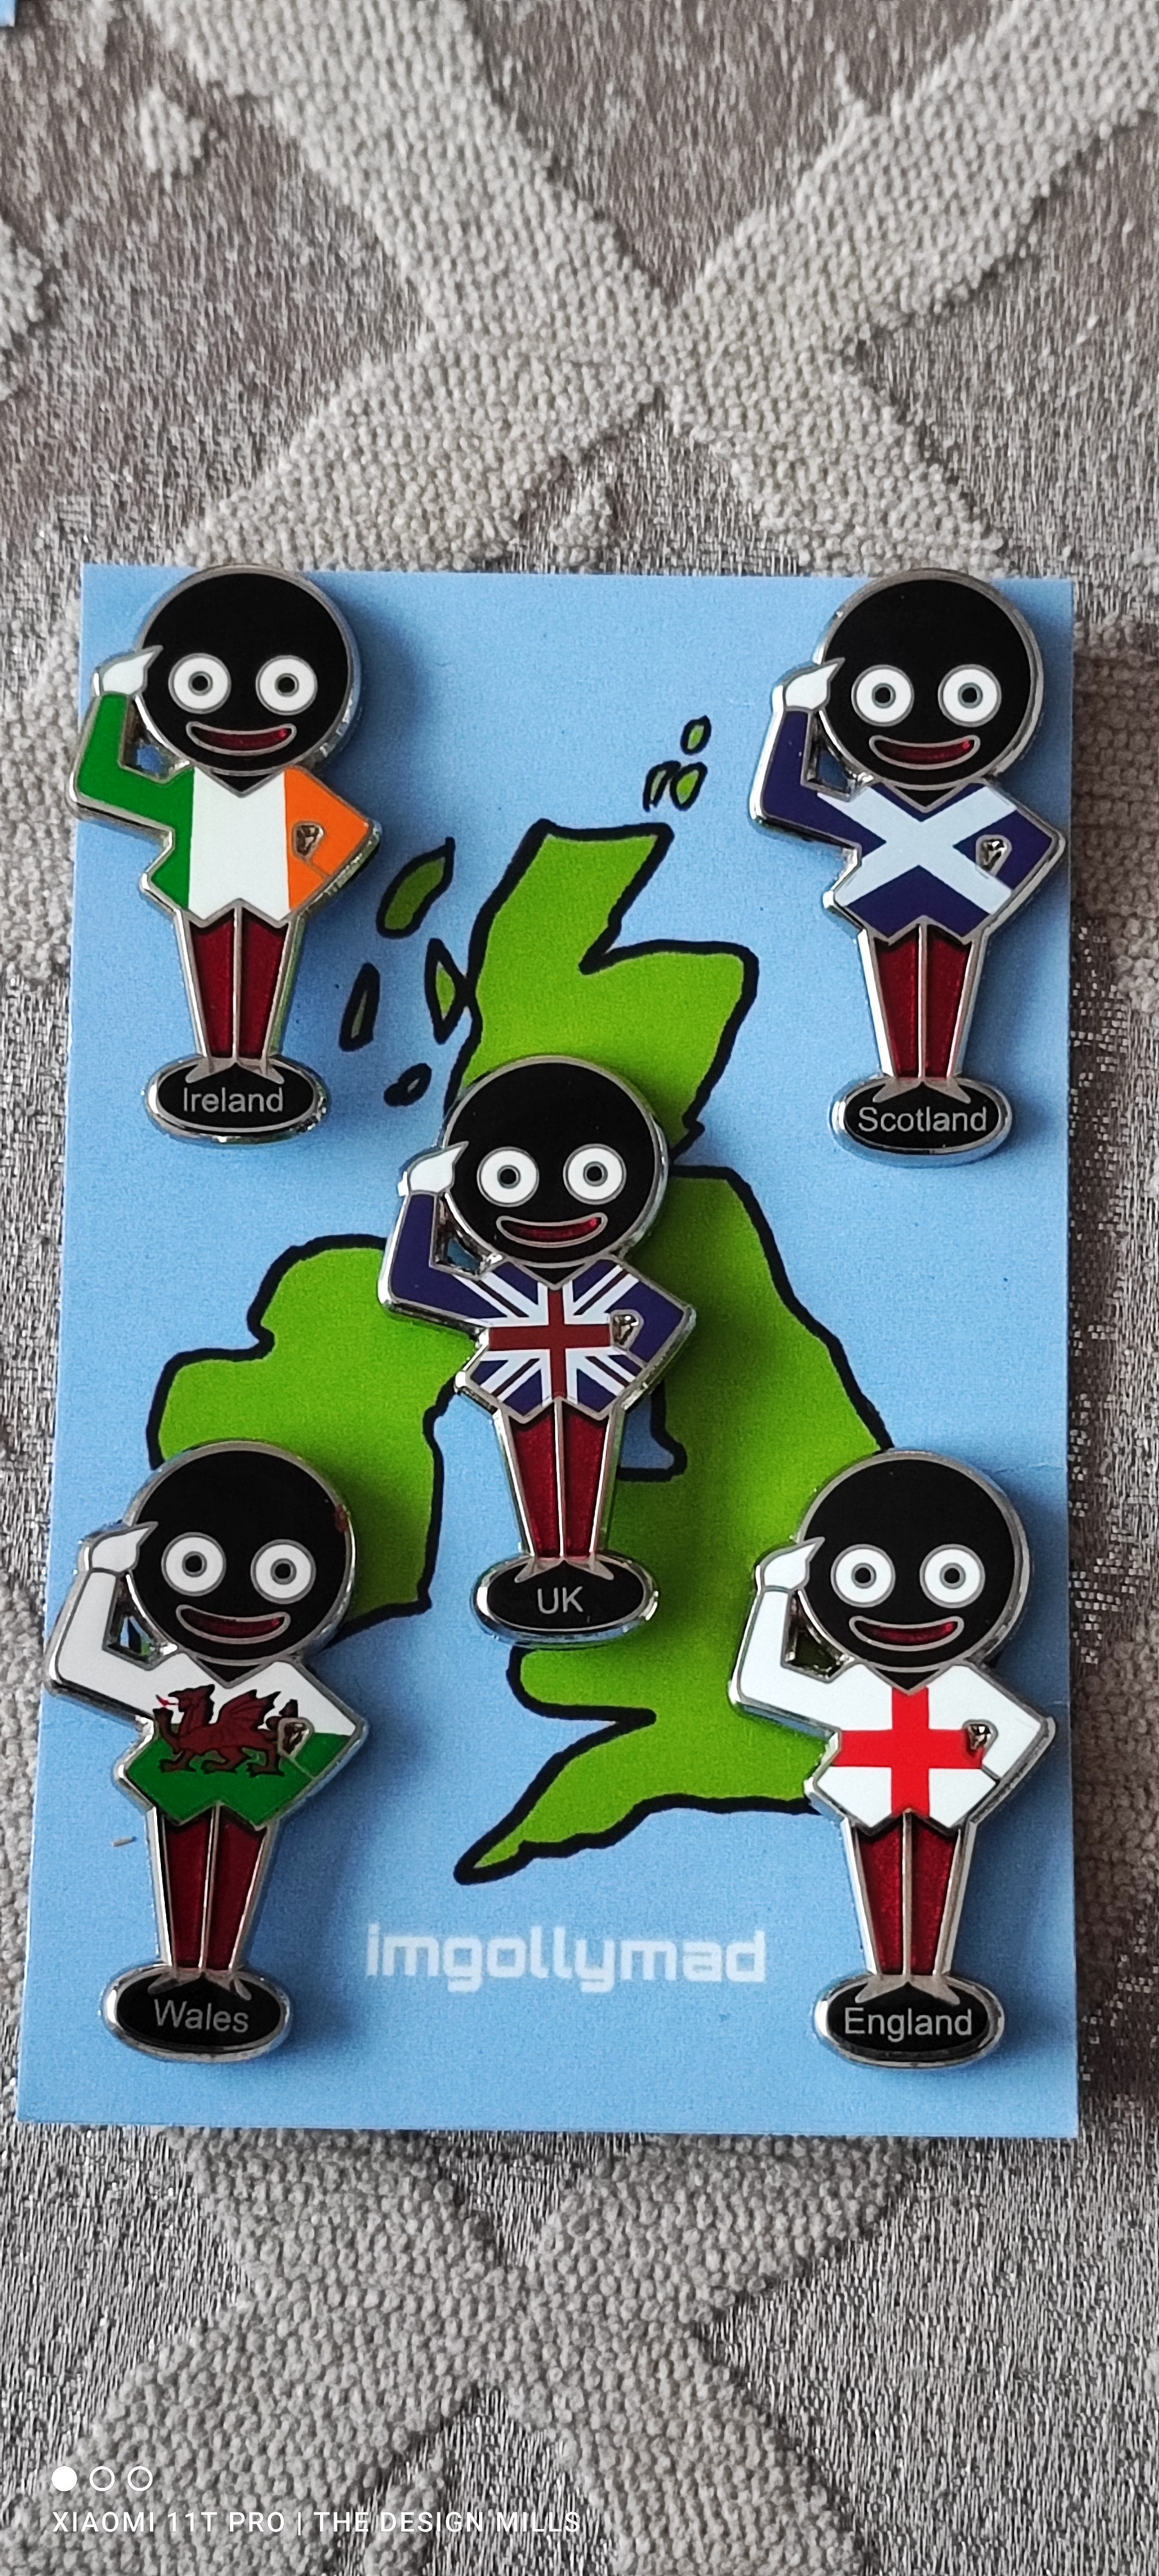 UK Regions Set of 5 Badges image - GollyBadges.com